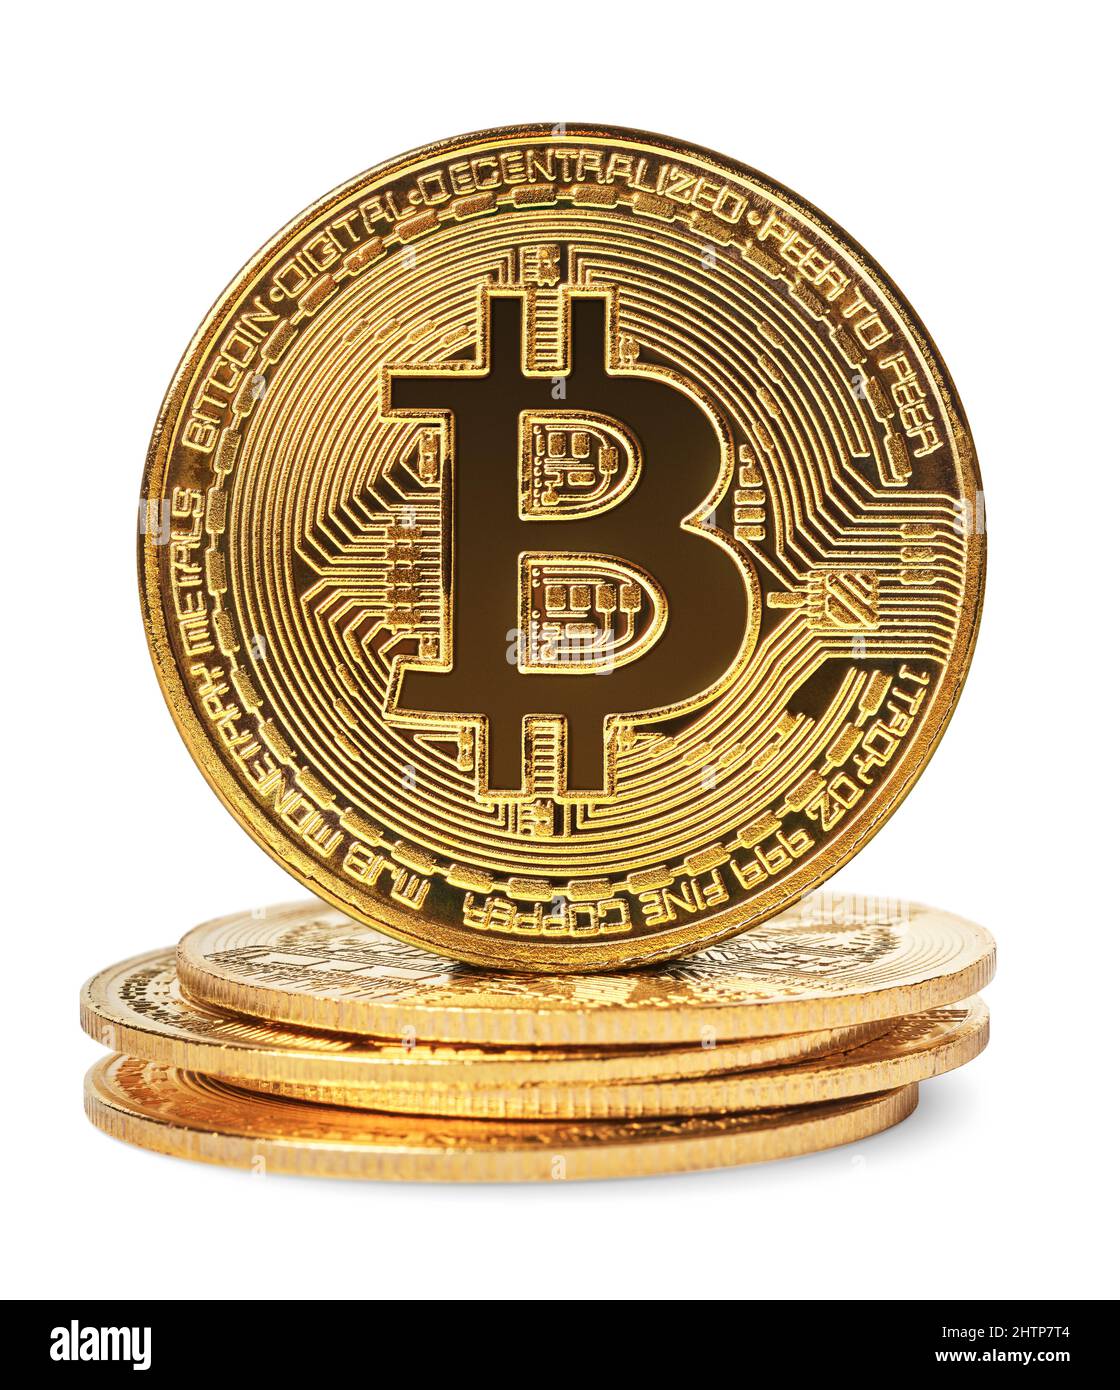 Objetos aislados: Grupo de monedas de bitcoin de oro, sobre fondo blanco Foto de stock